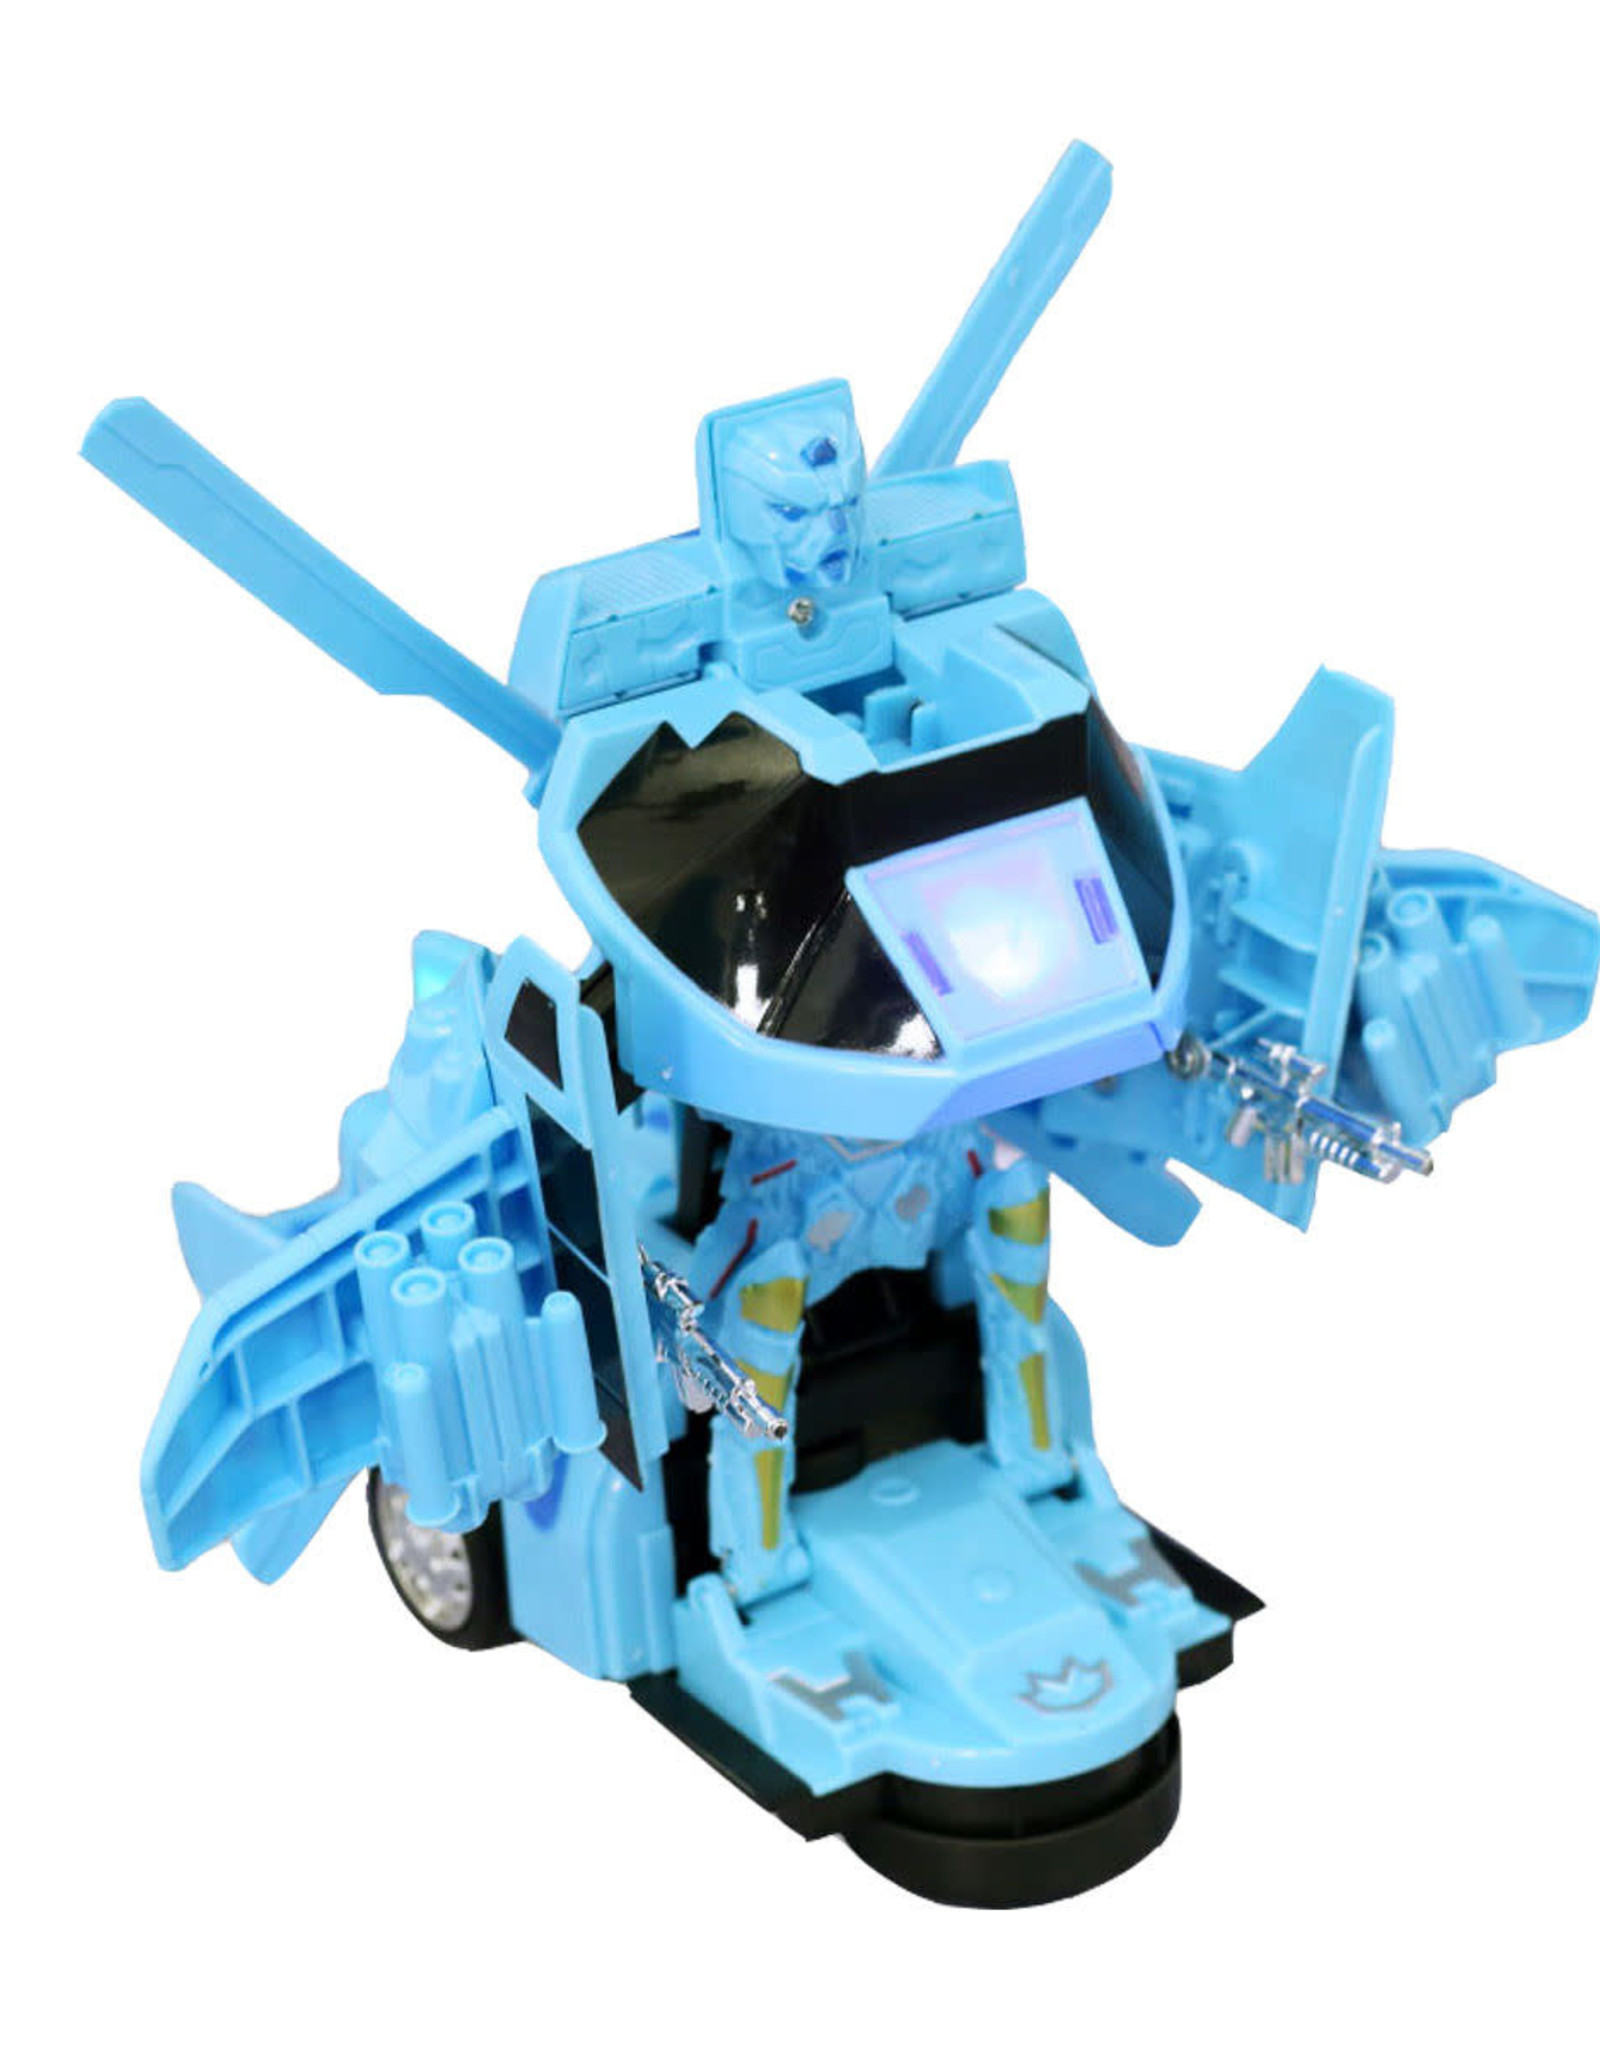 8.5" Light & Sound Transforming Robot Copter